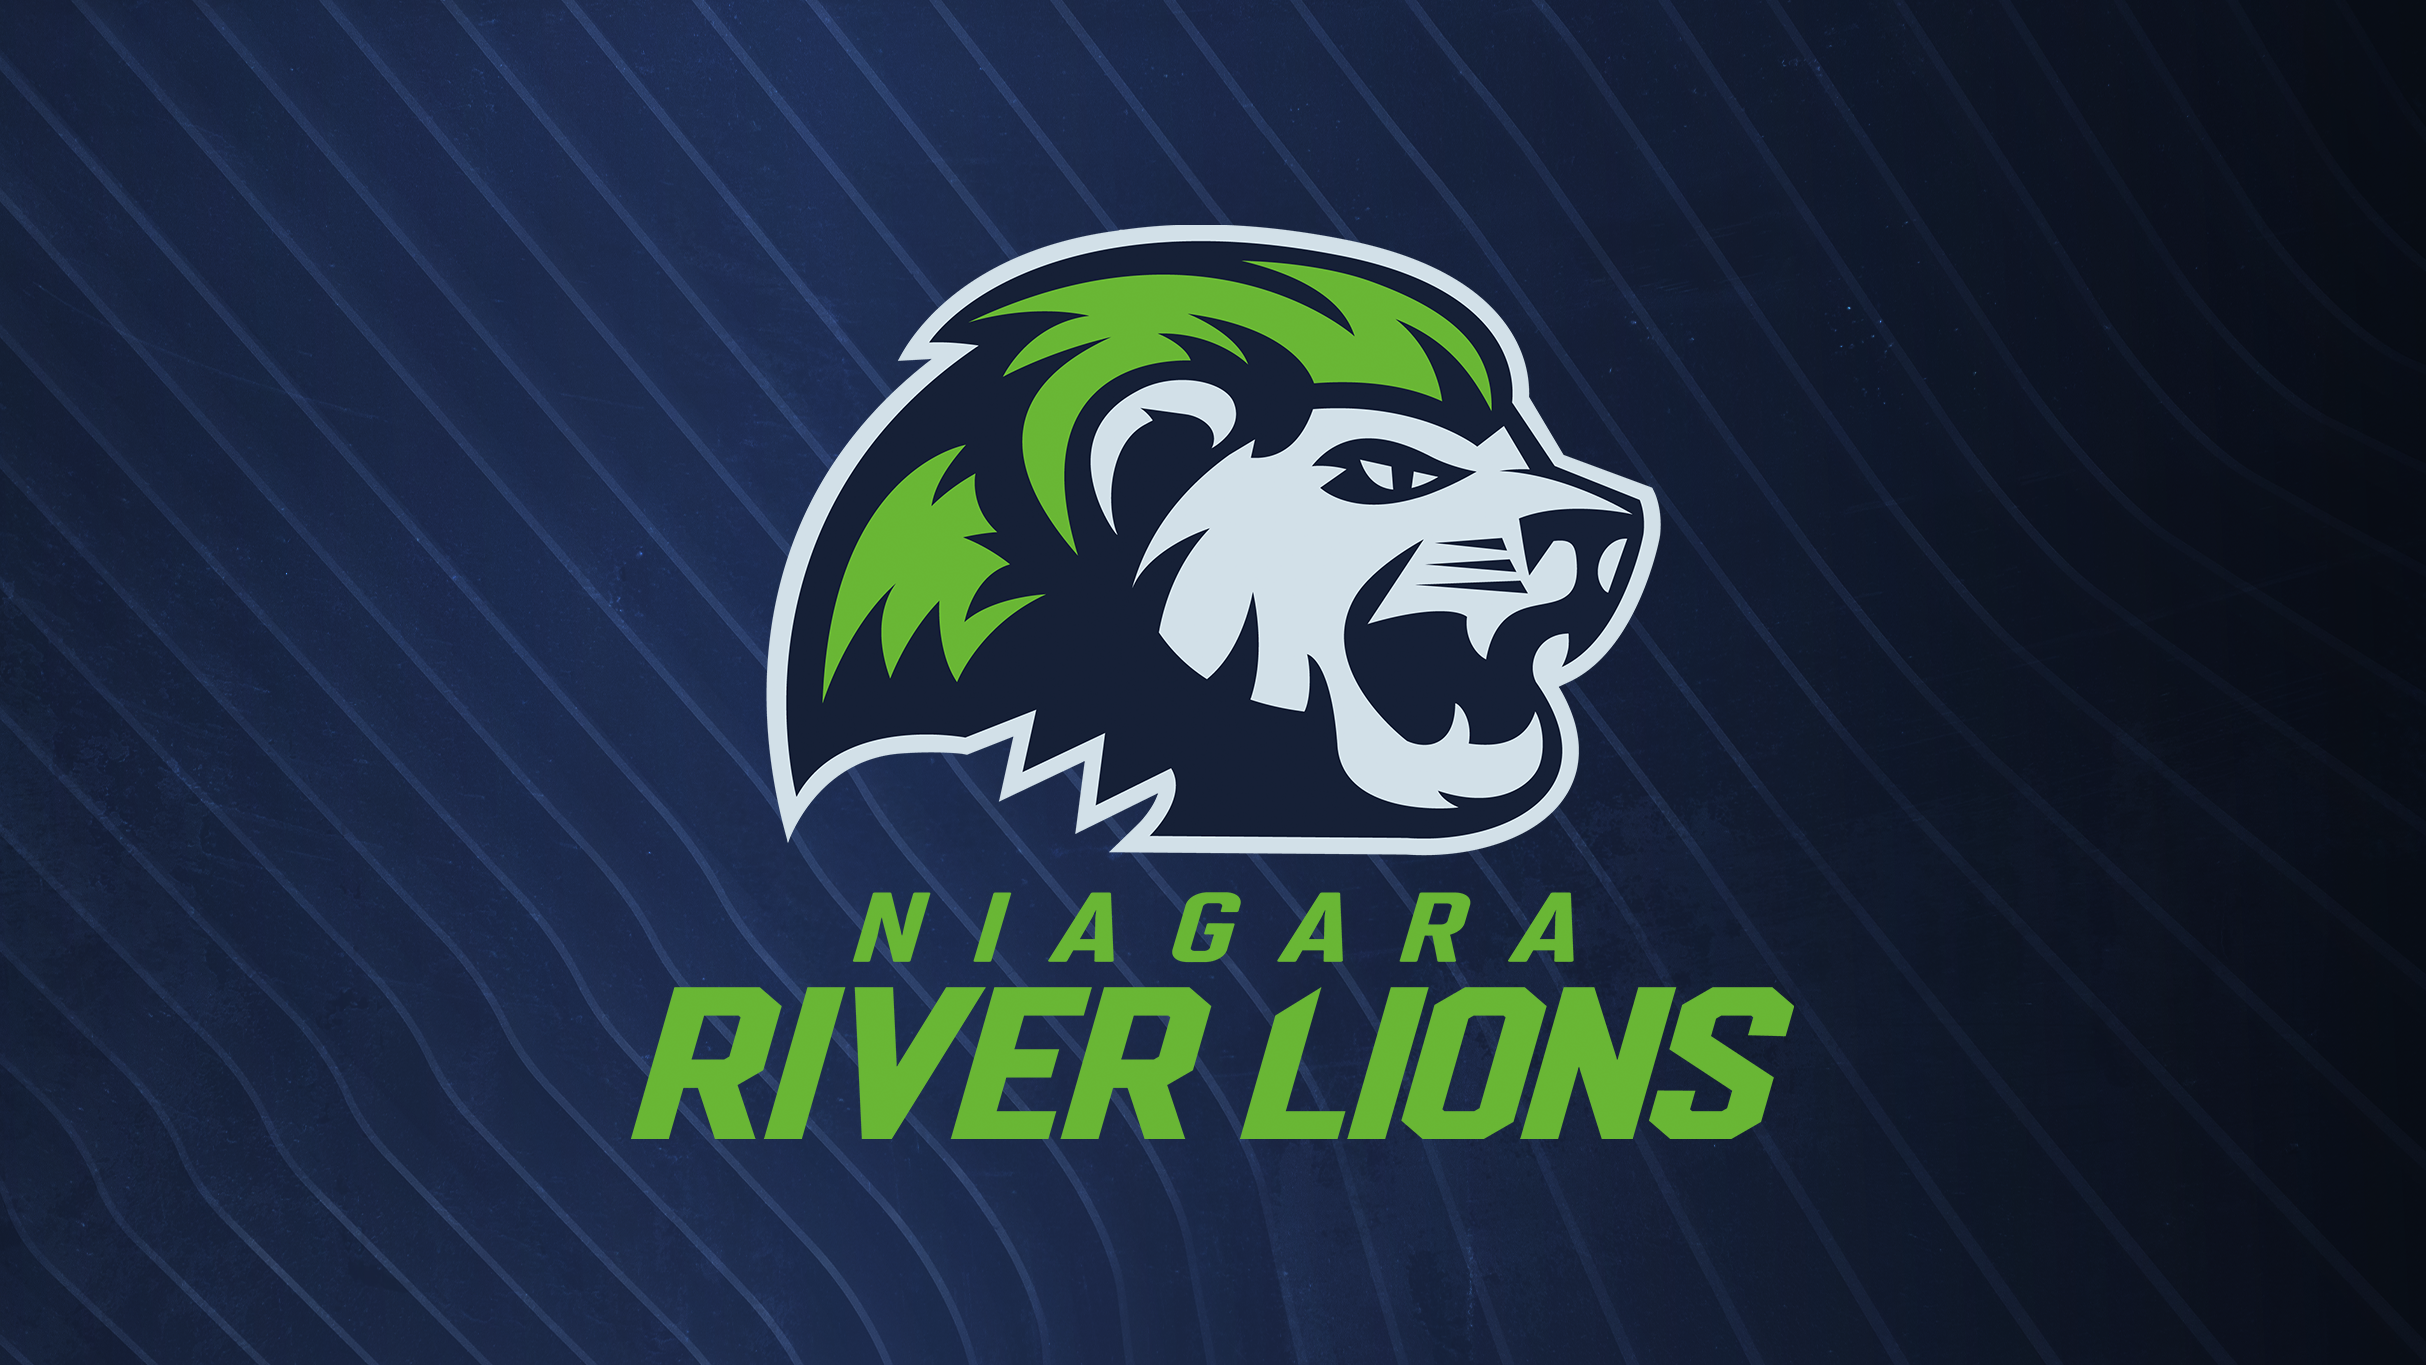 Niagara River Lions vs. Edmonton Stingers presale passwords